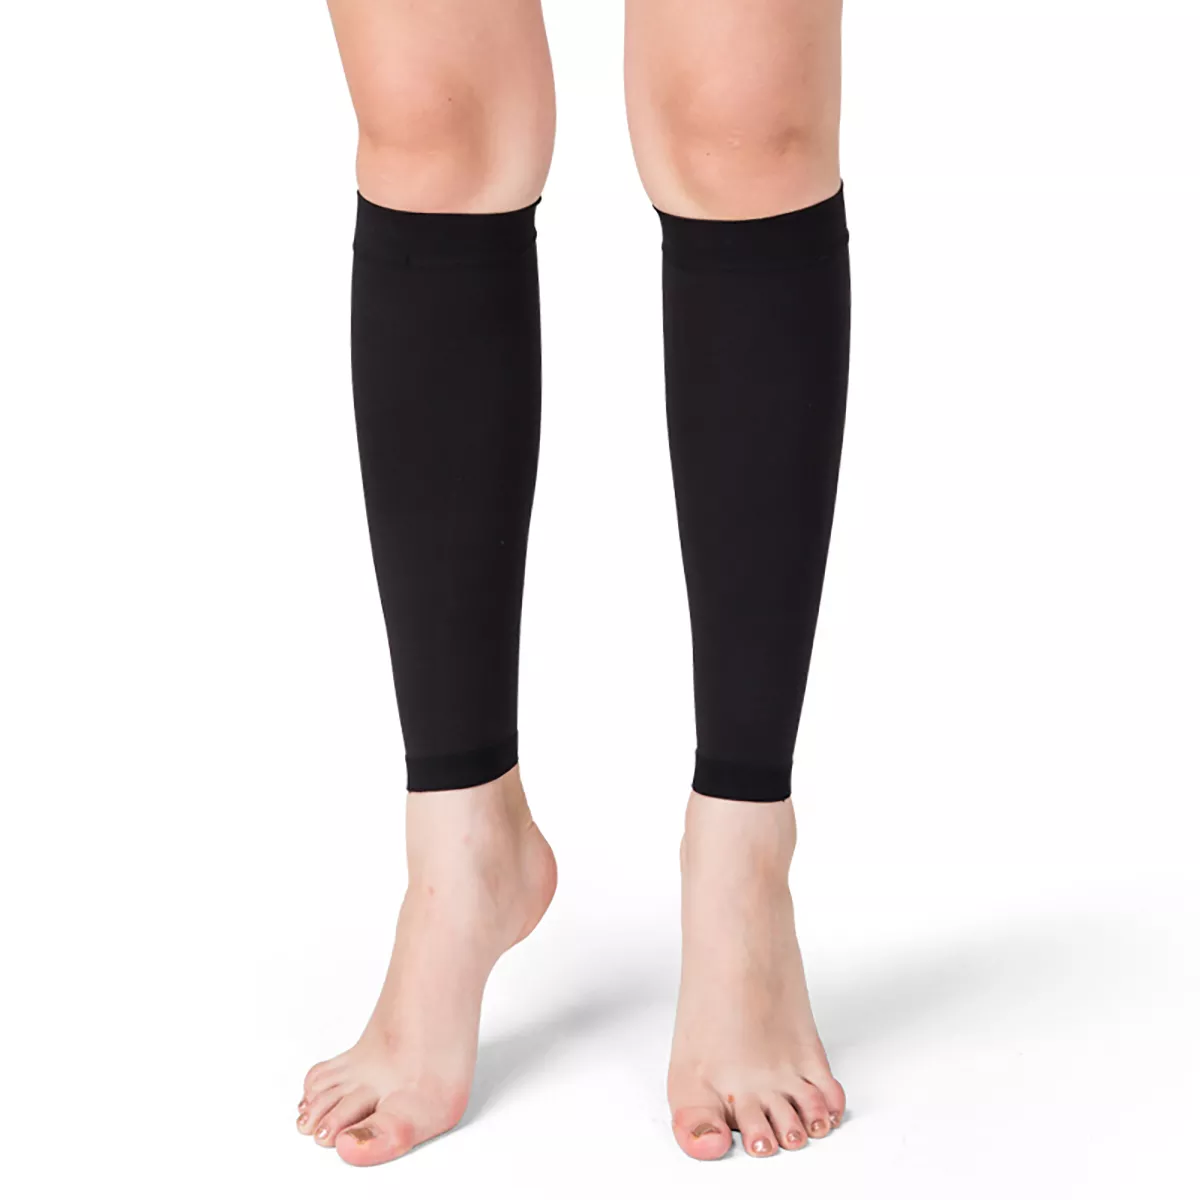 Varcoh ® 20-30 mmHg Women Calf Sleeve Compression Socks Black